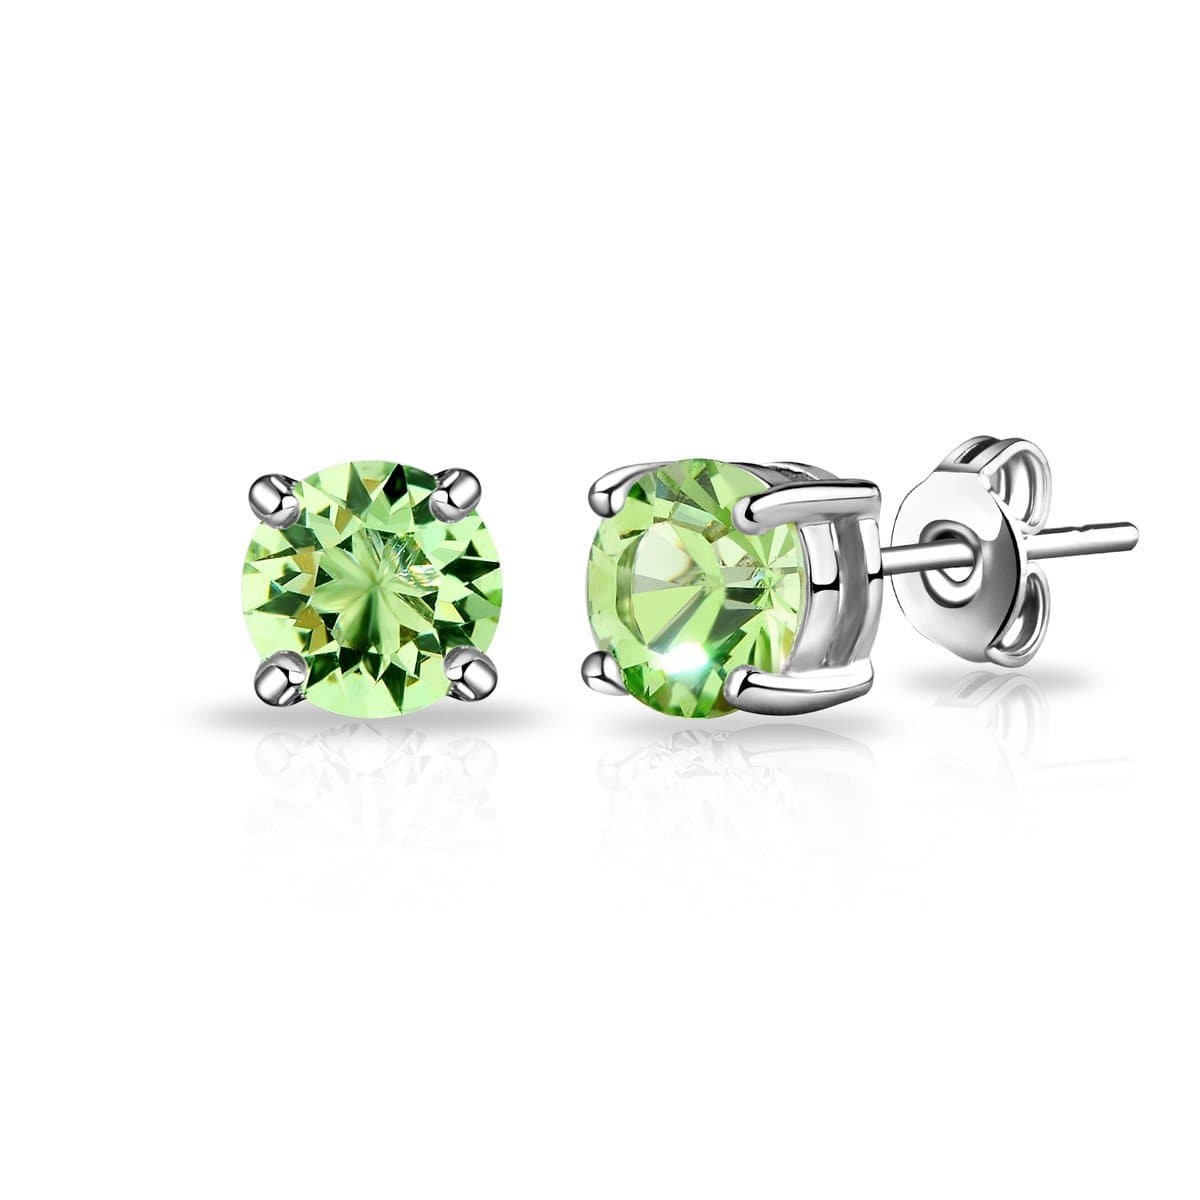 Light Green Stud Earrings Created with Zircondia® Crystals by Philip Jones Jewellery